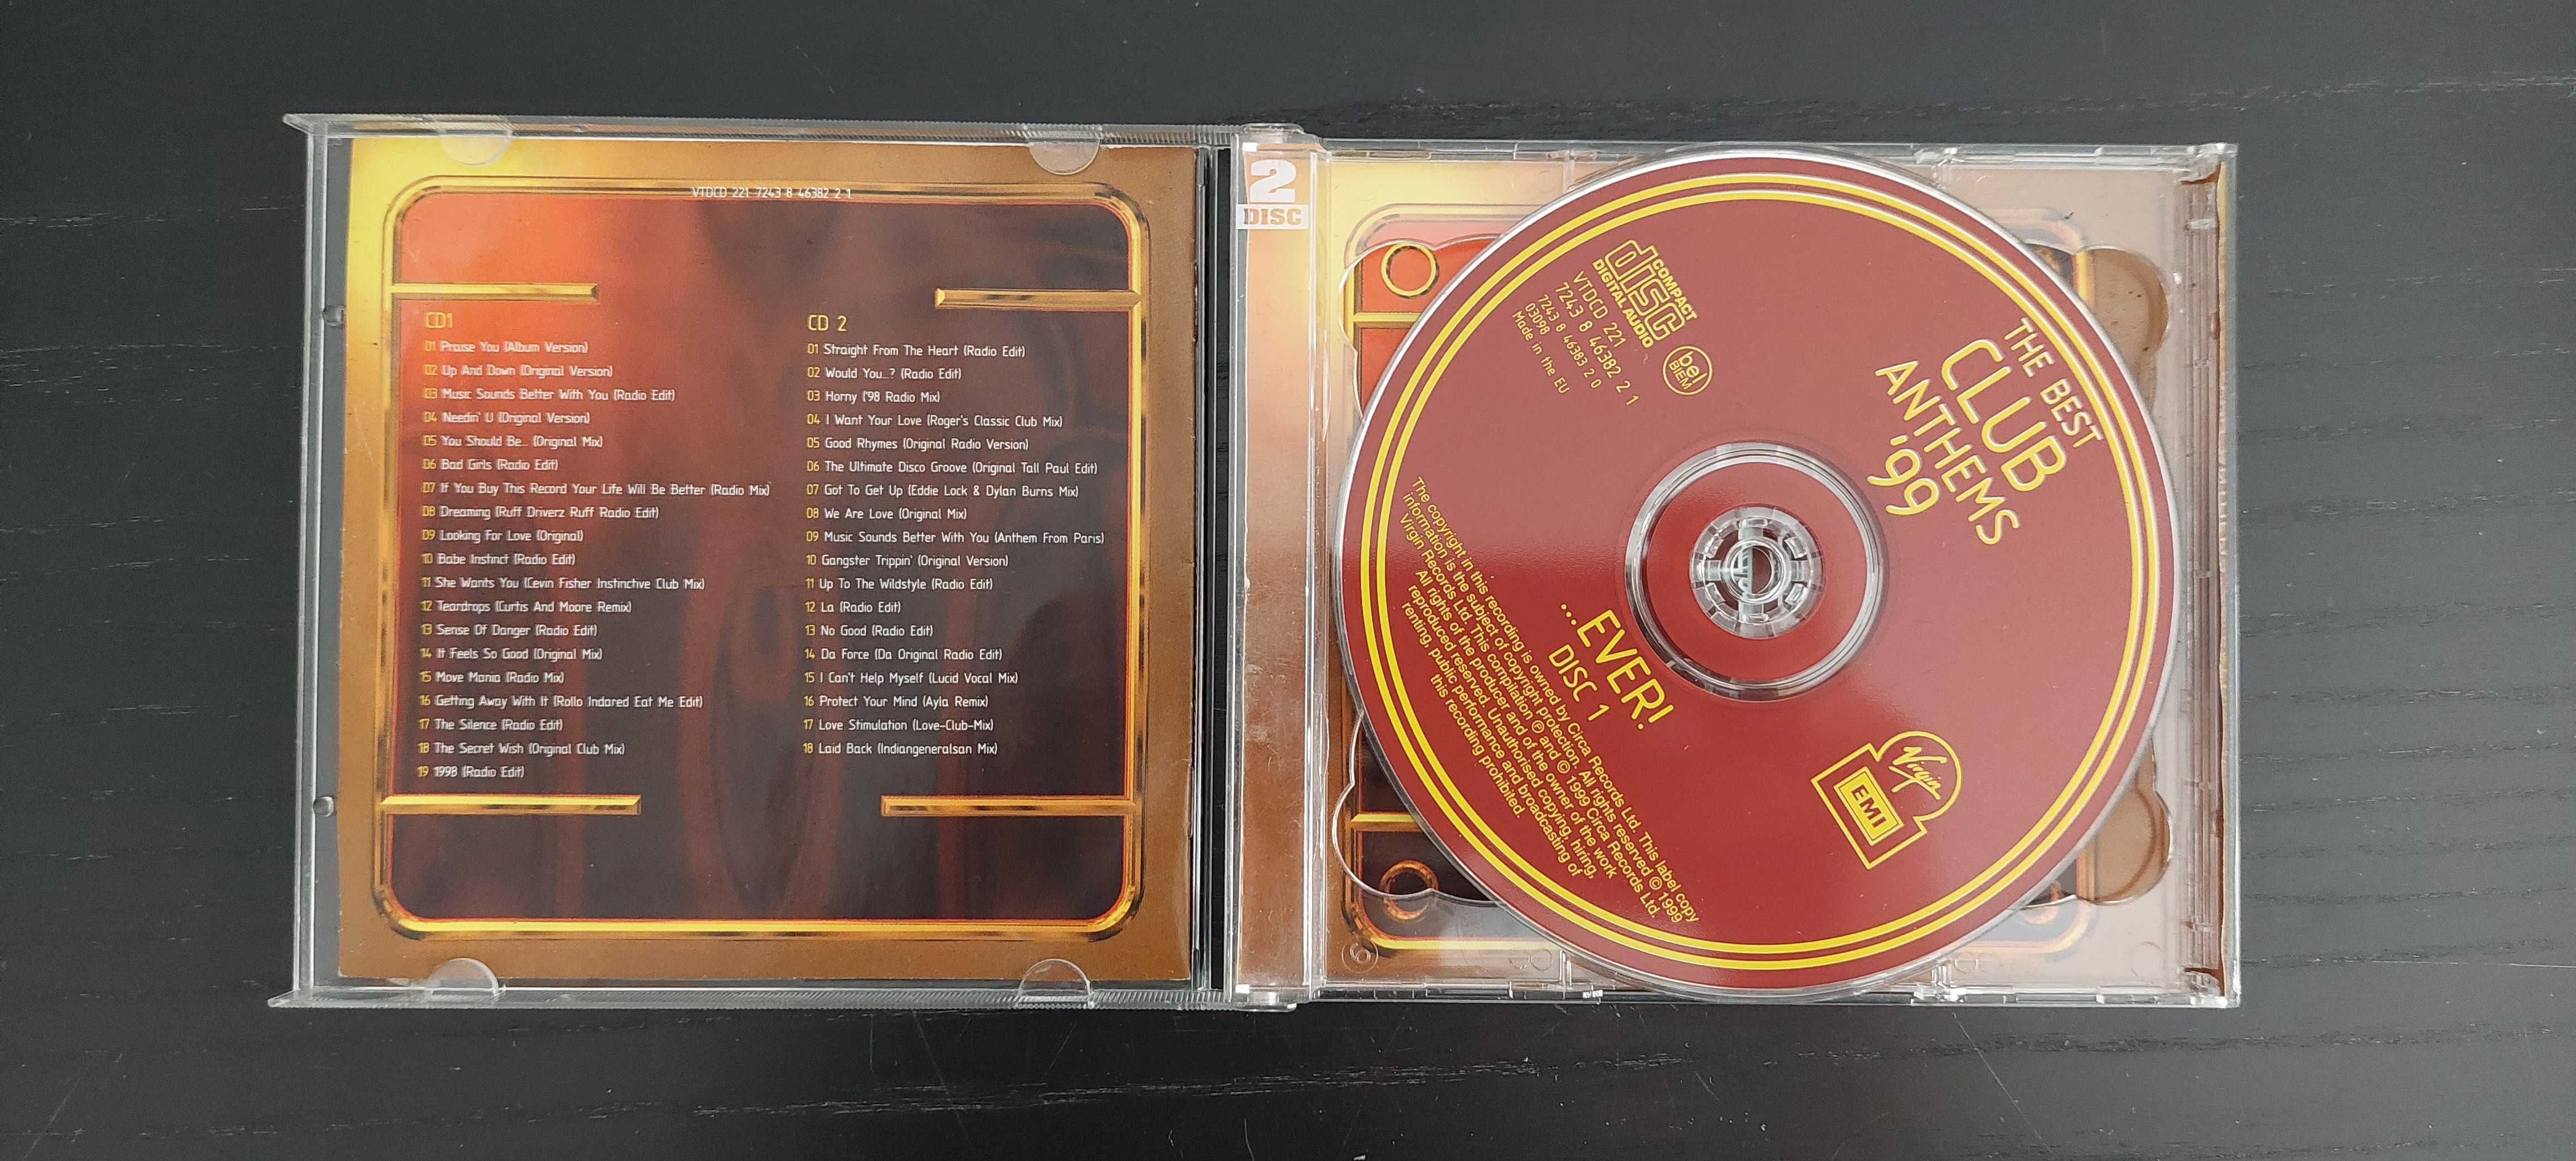 CD Original The best club anthems 99